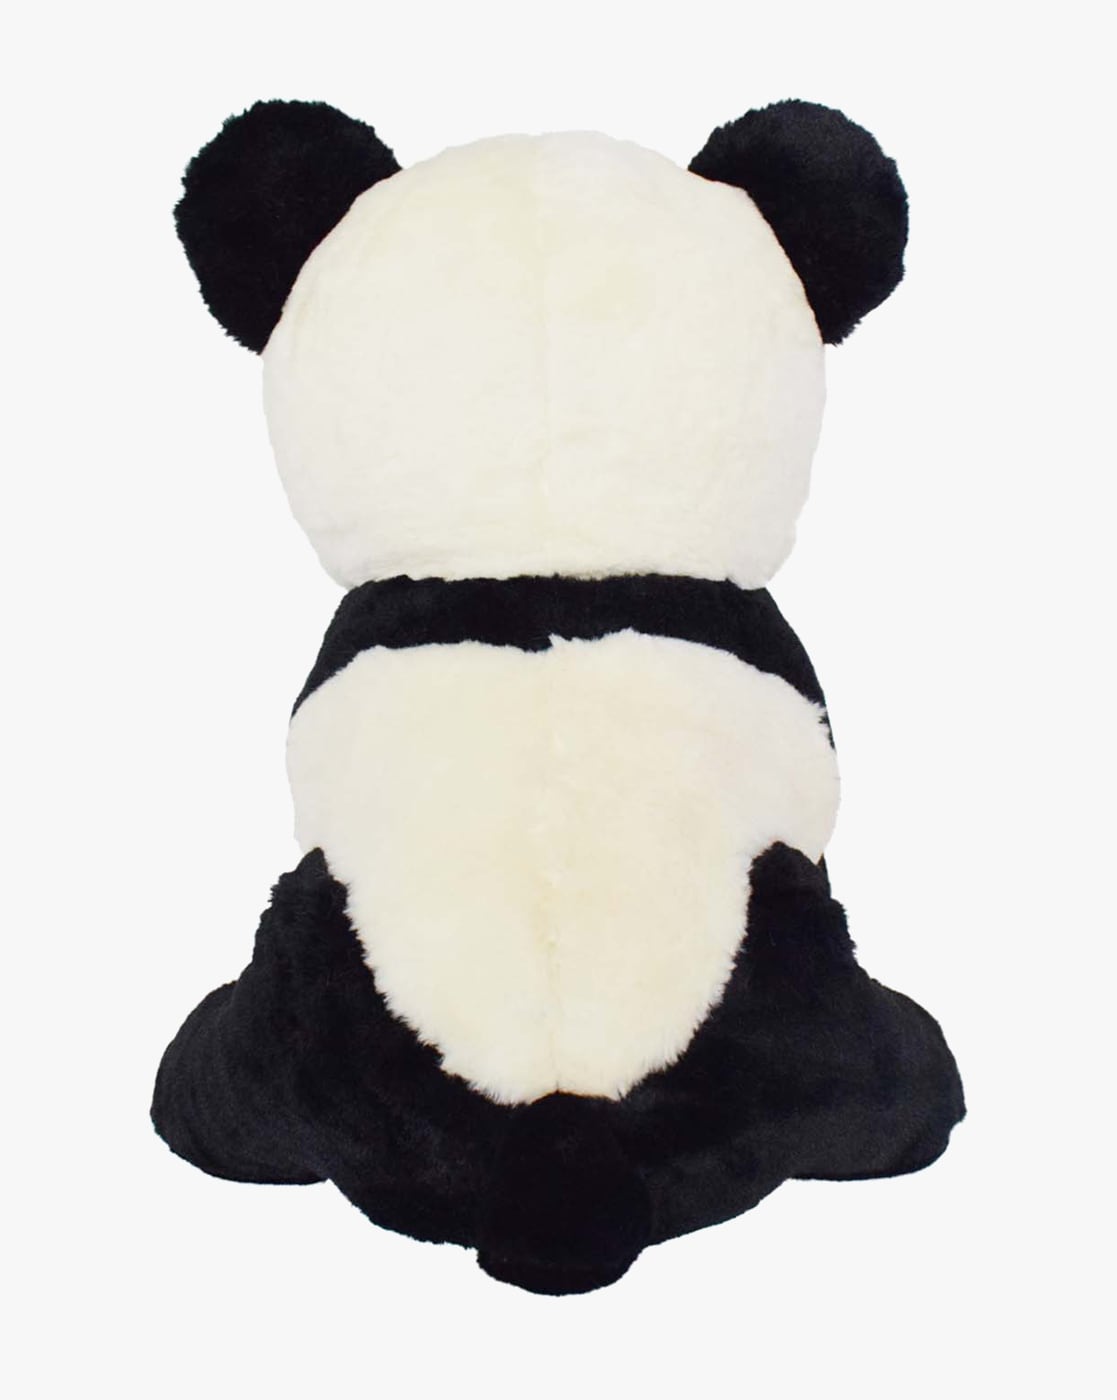 Fridja Hot Stuffed Plush Doll Toy Animal Cute Panda India